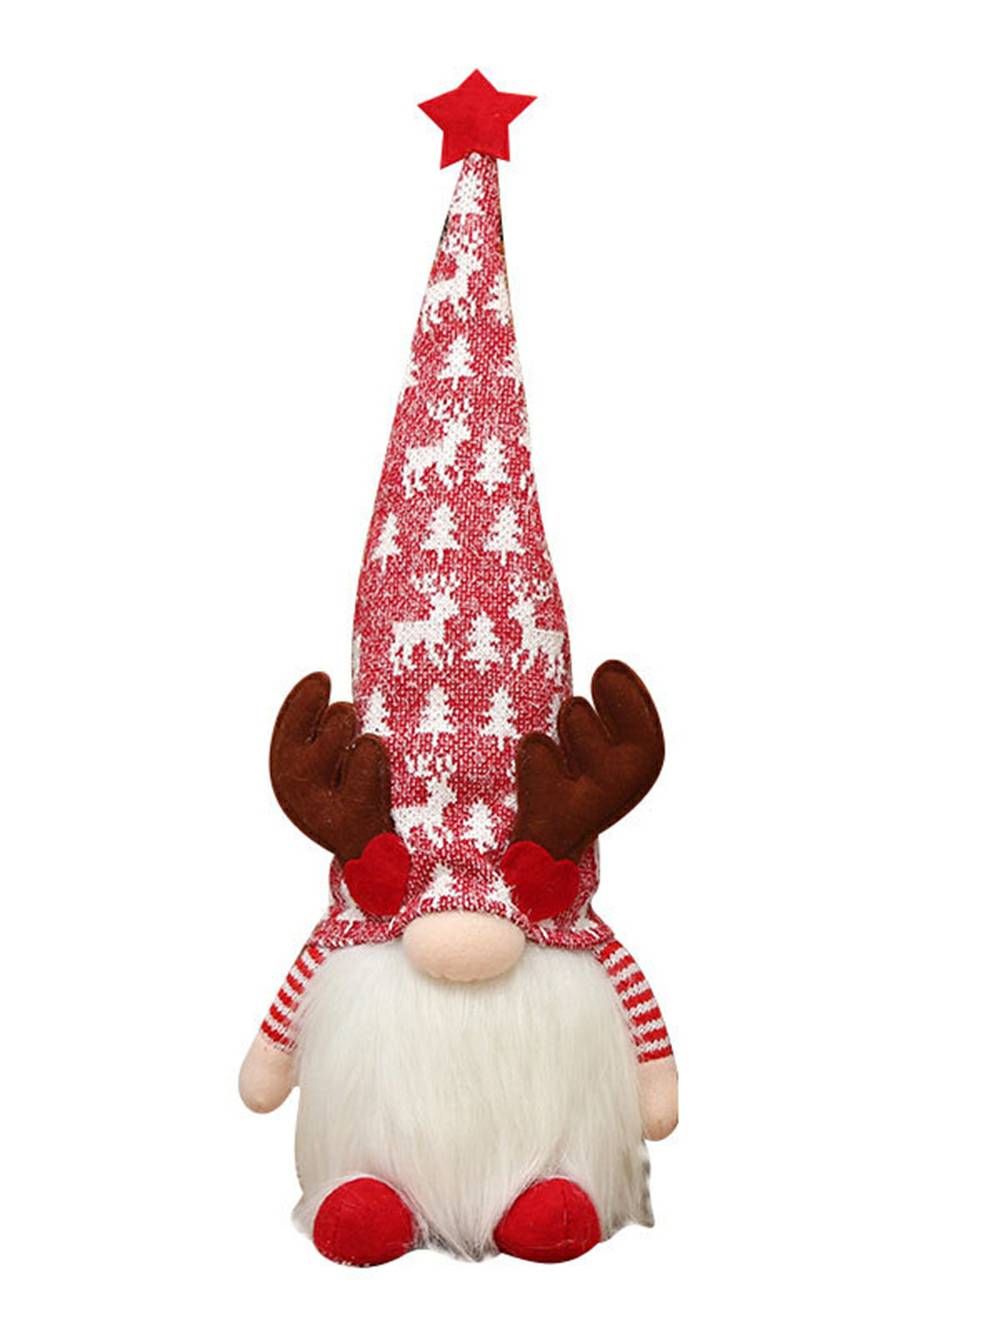 Chrëschtdag Plüsch Elf Reindeer Chrëschtdag Tree Rudolph Doll